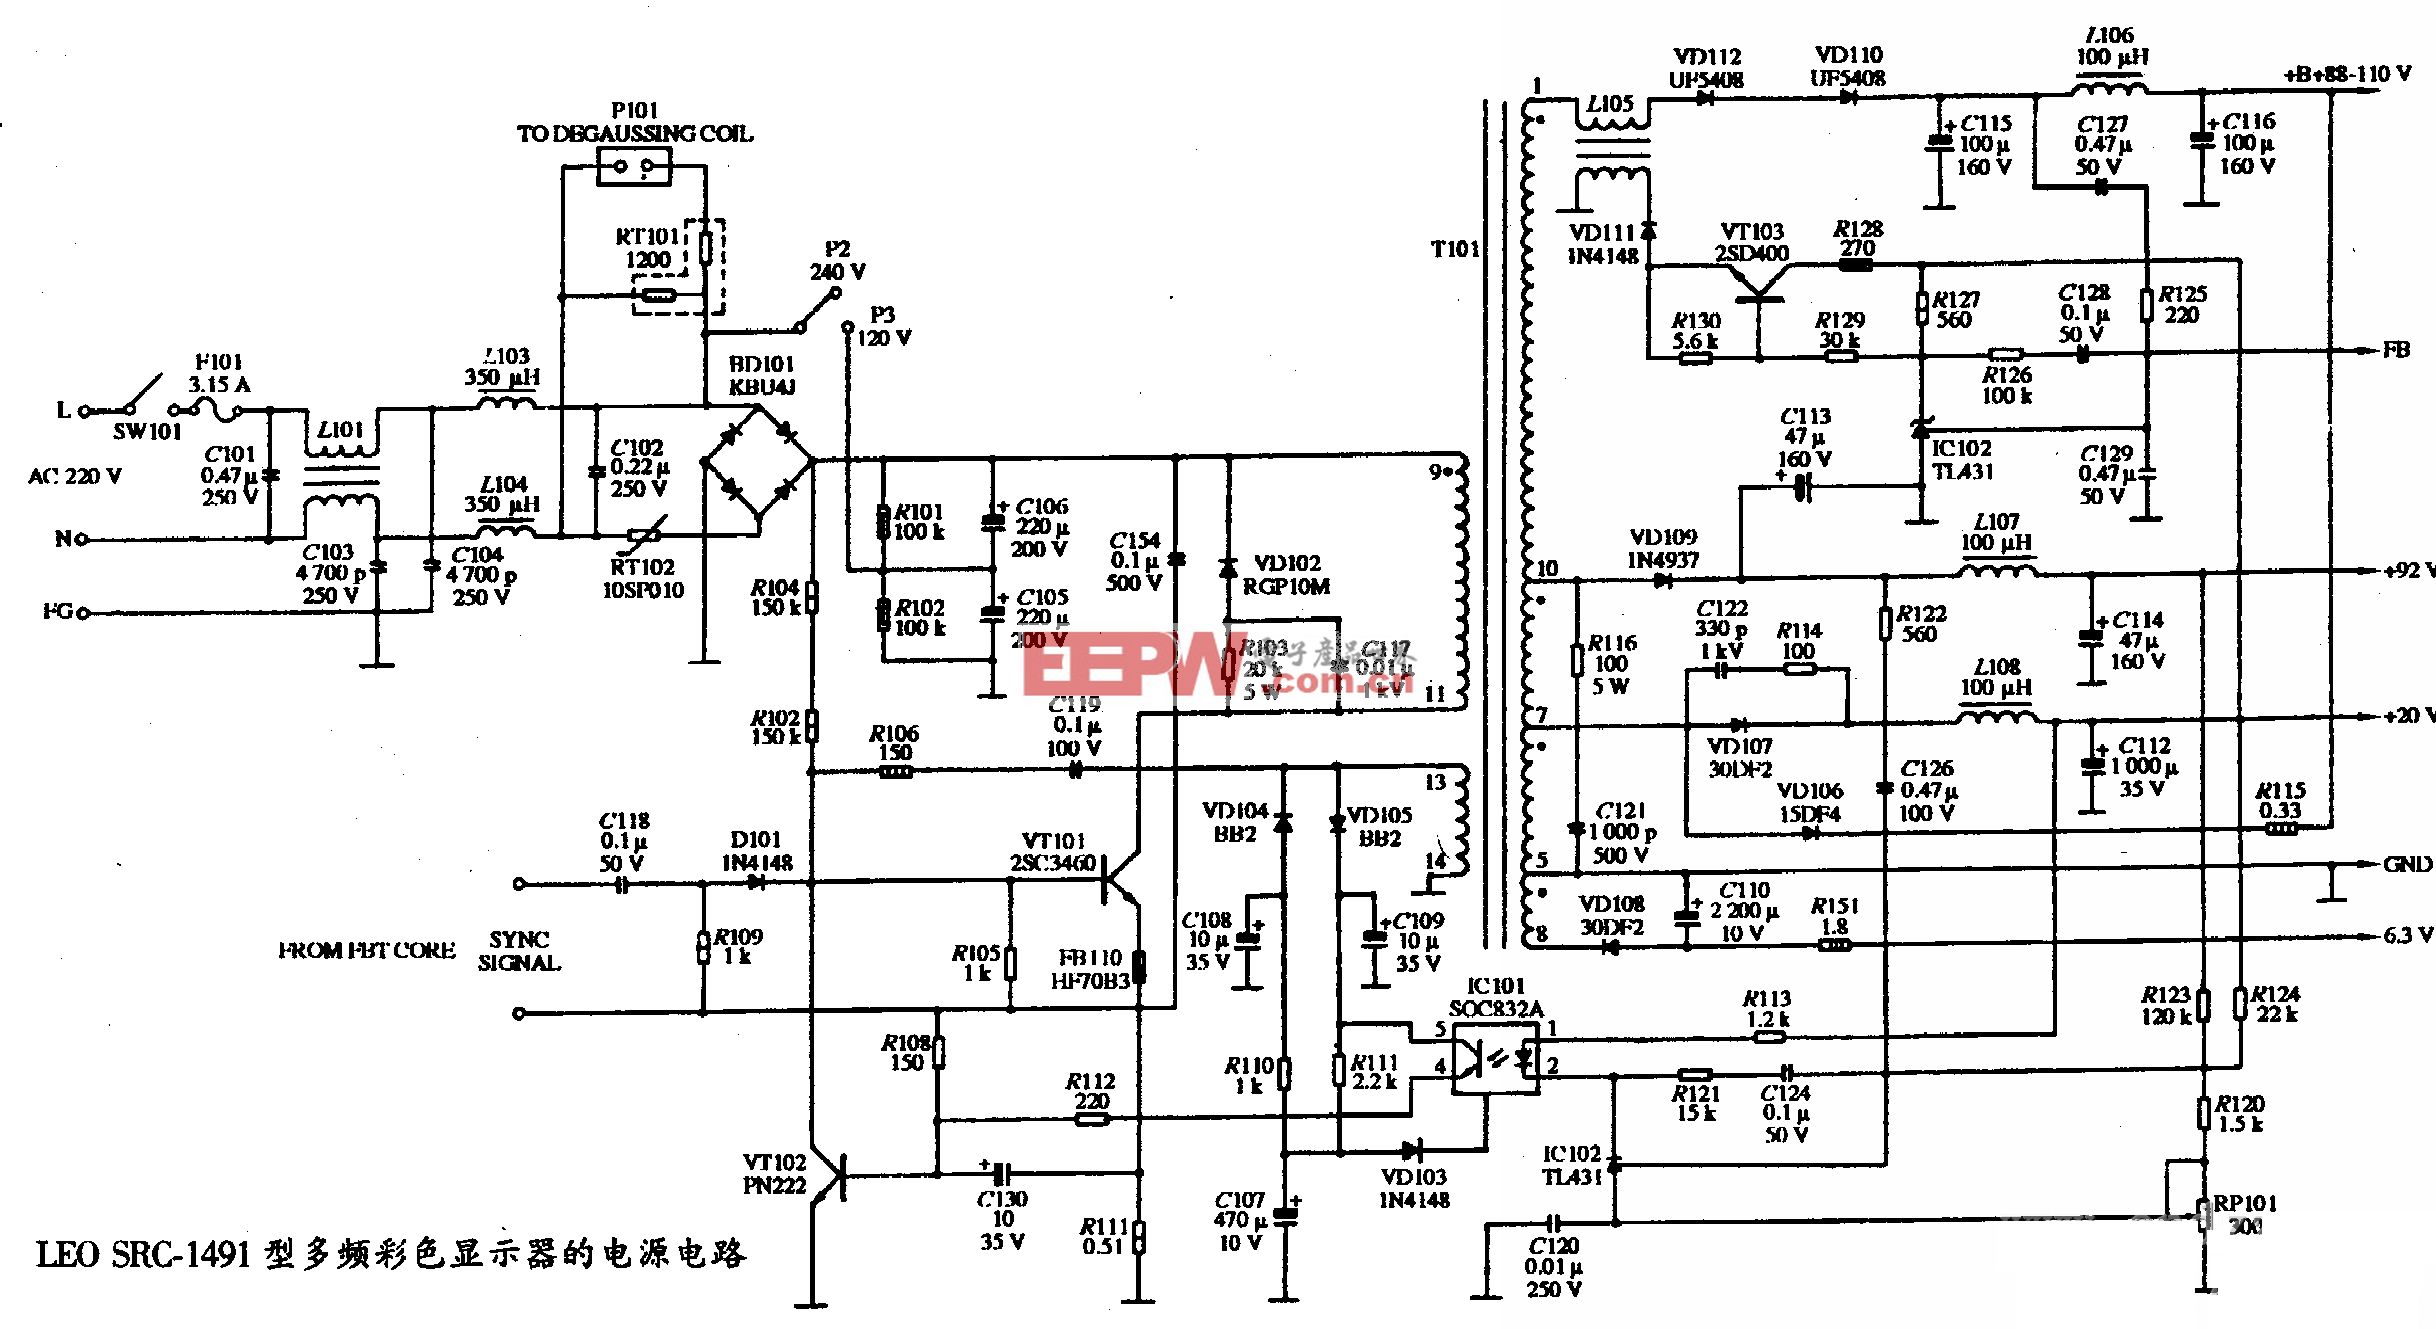 LEO SRC-1491型多频彩色显示器的电源电路图